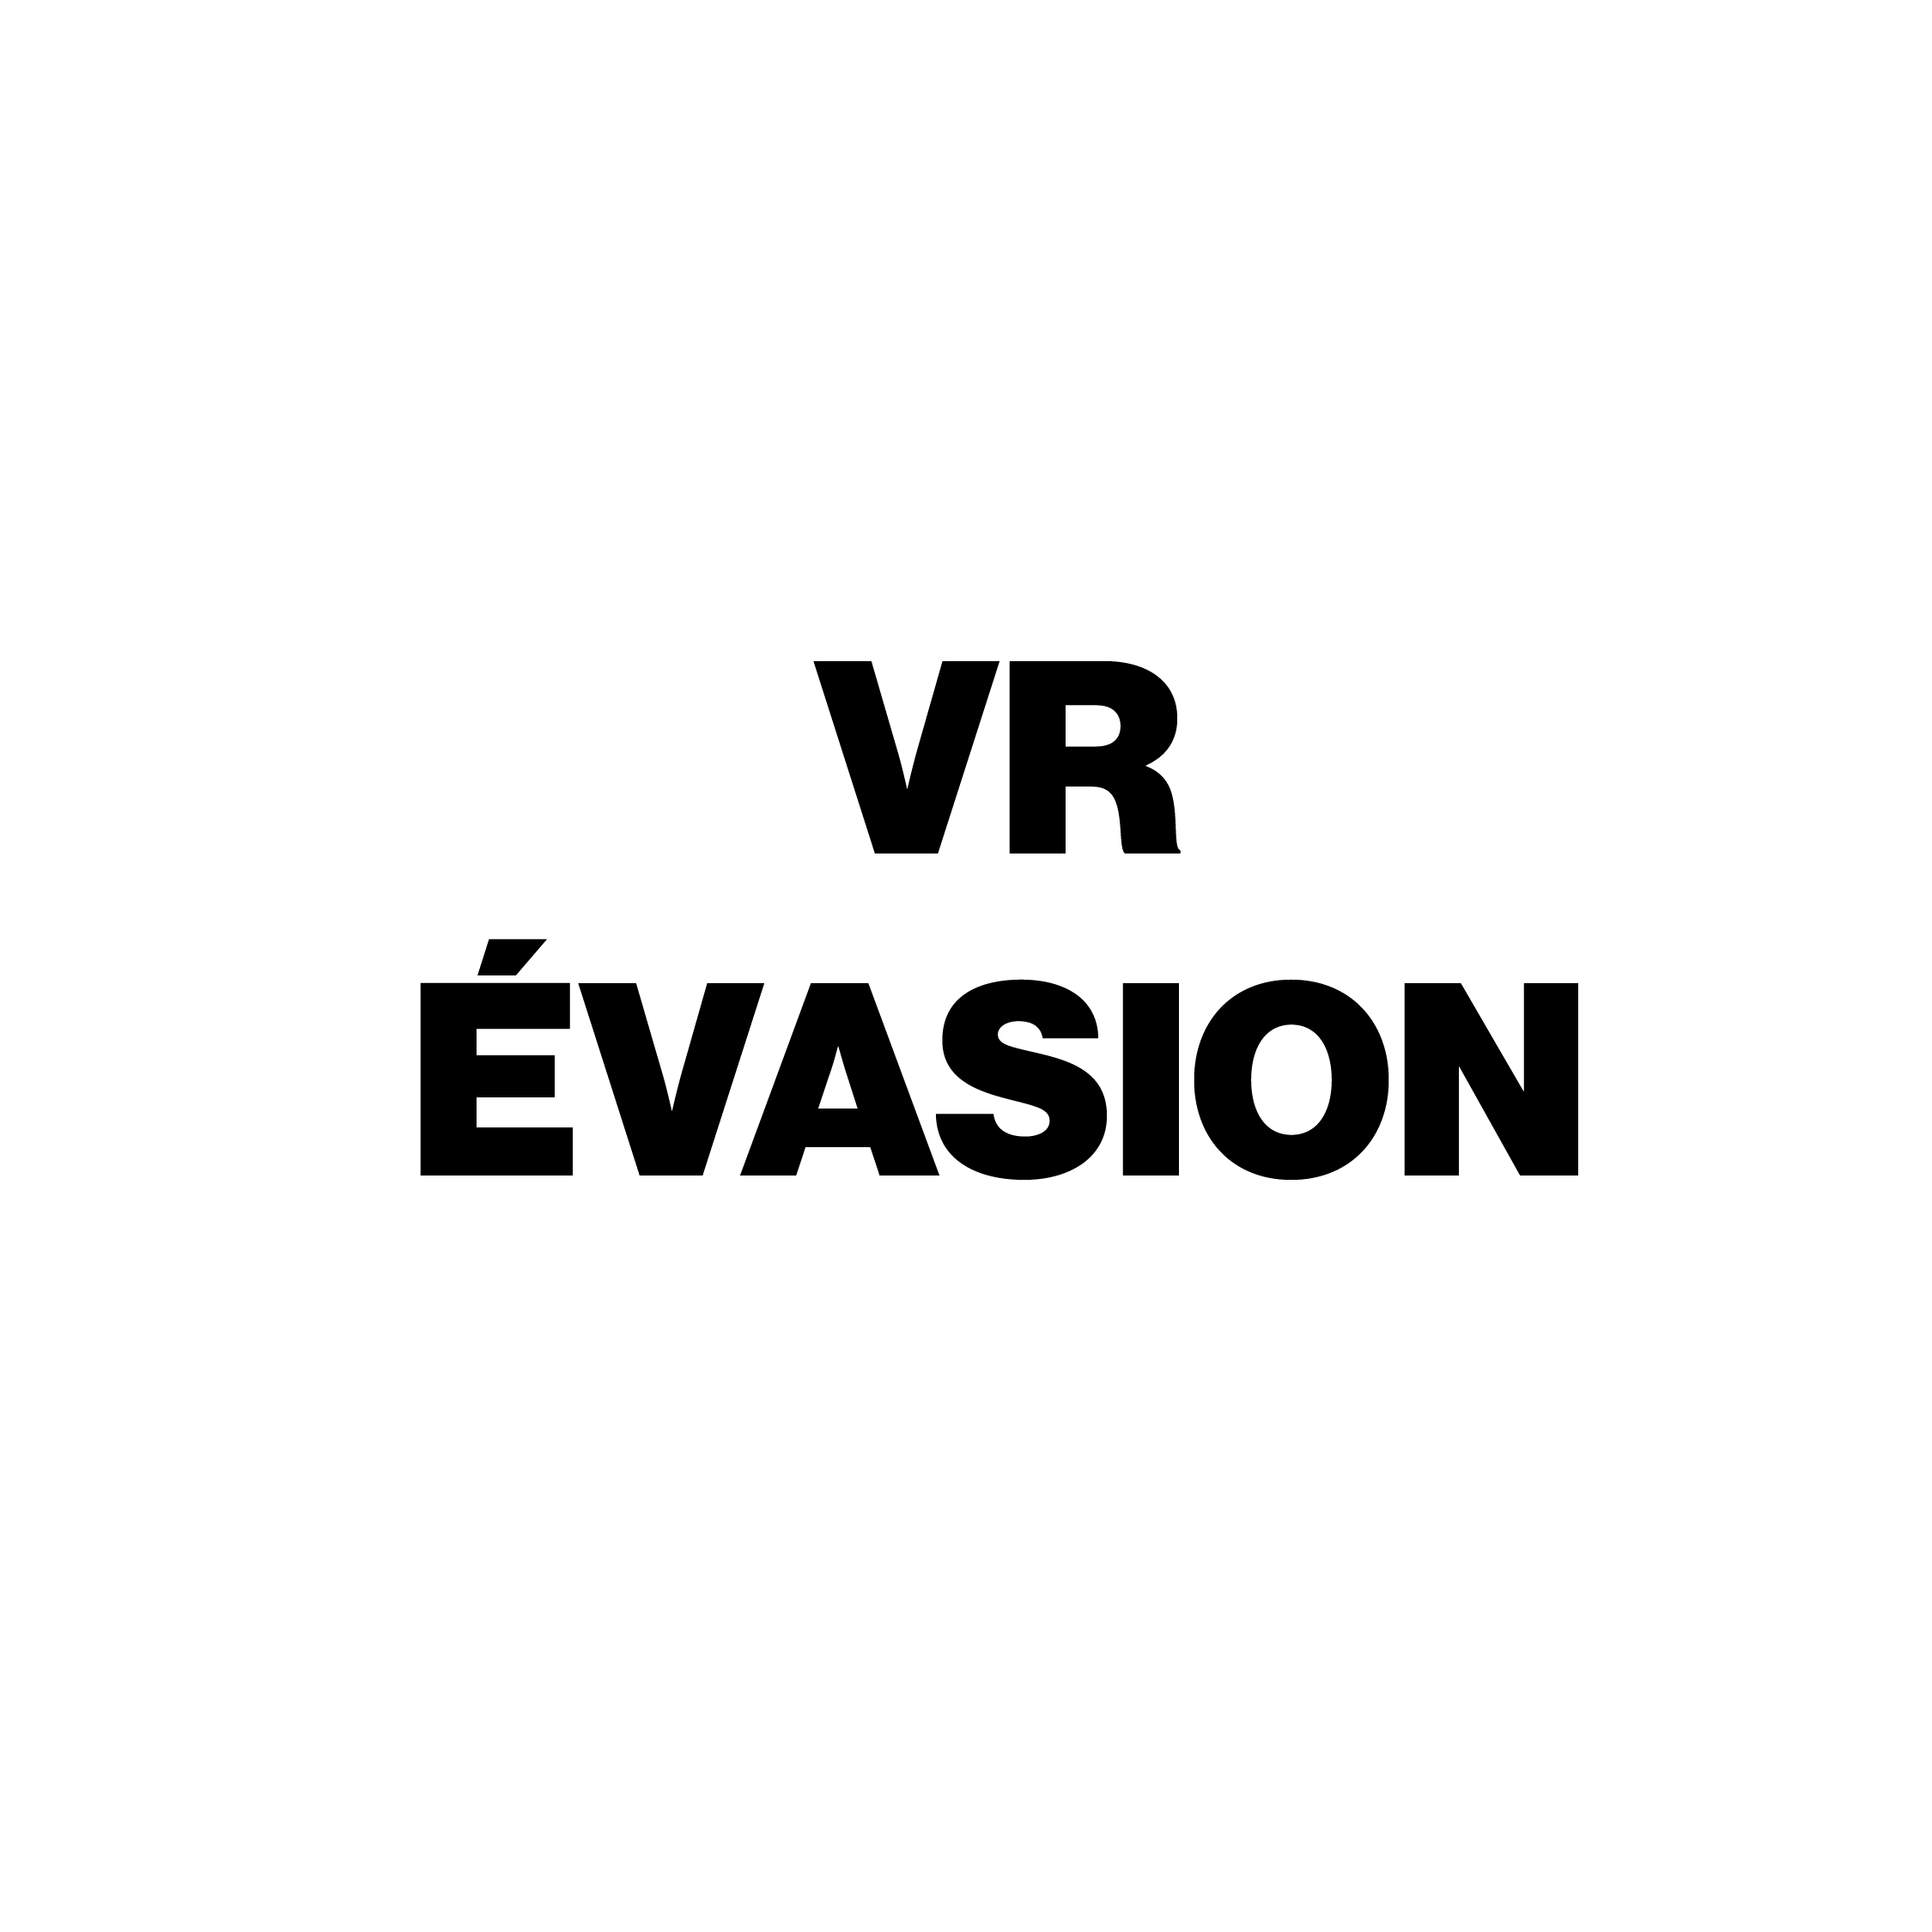 VR Evasion logo